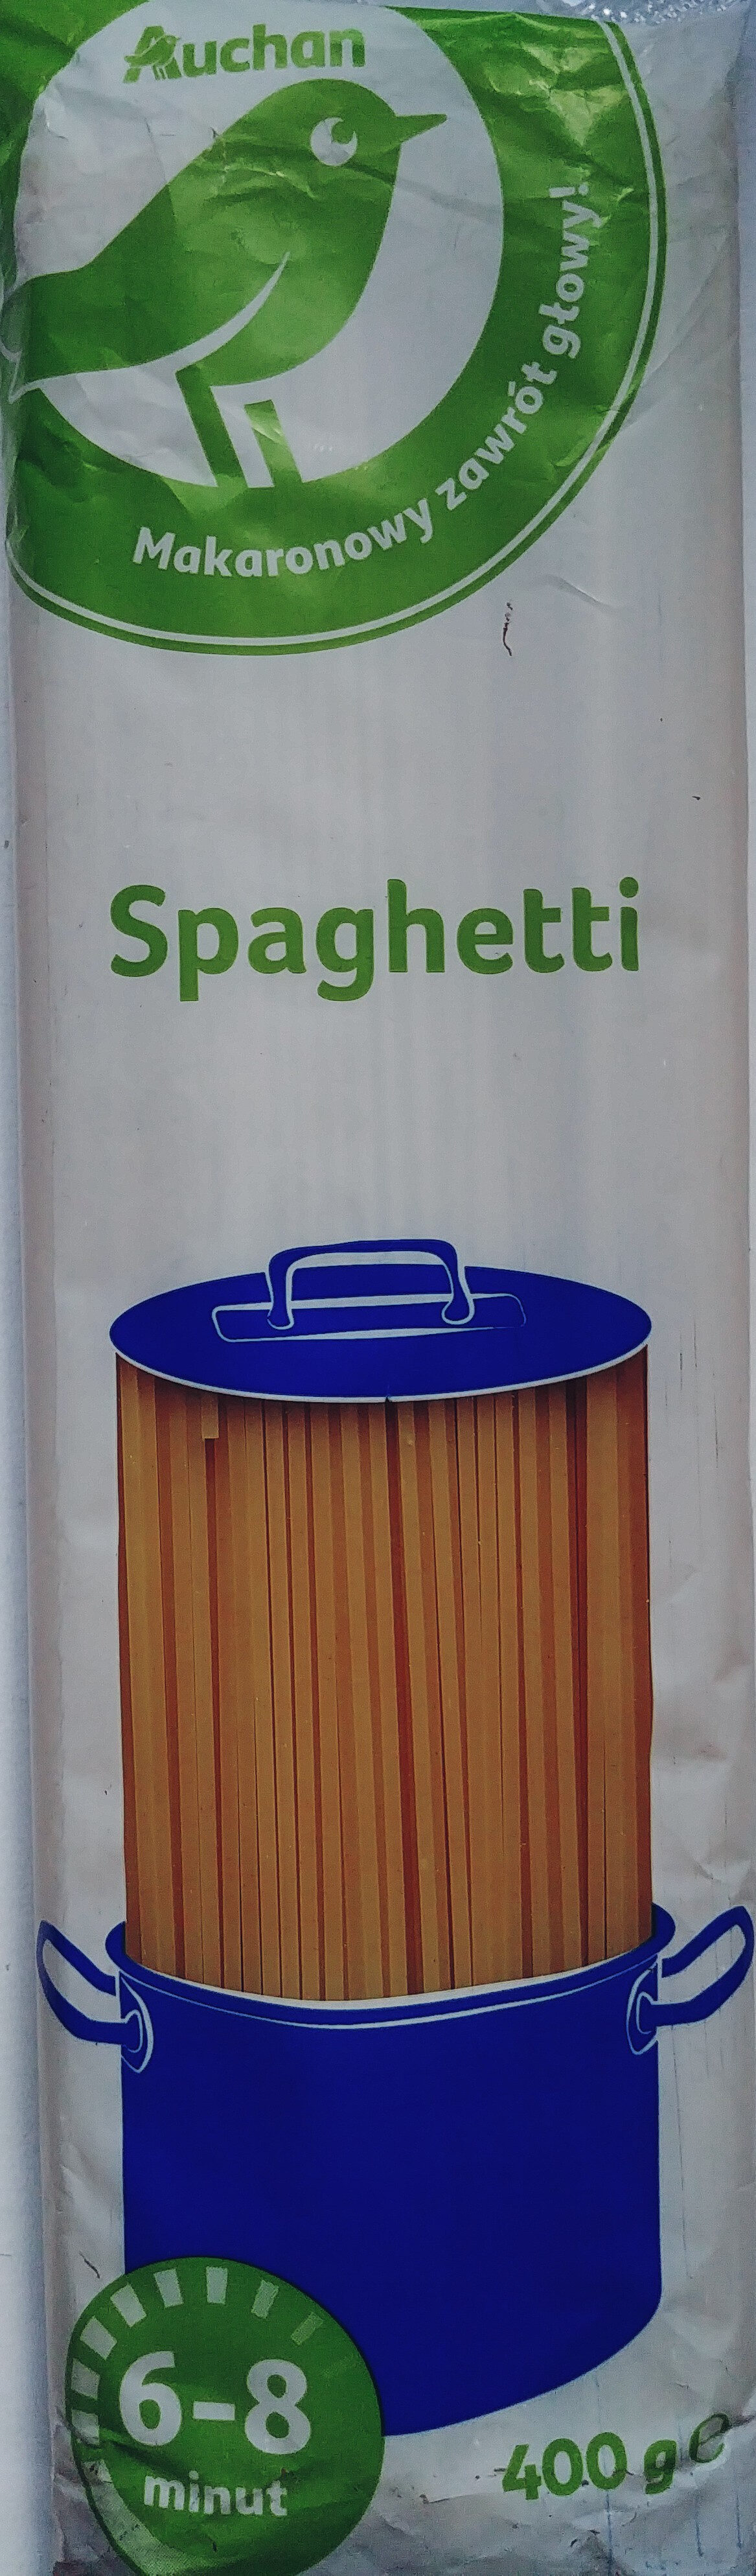 Makaron Spaghetti - Product - pl